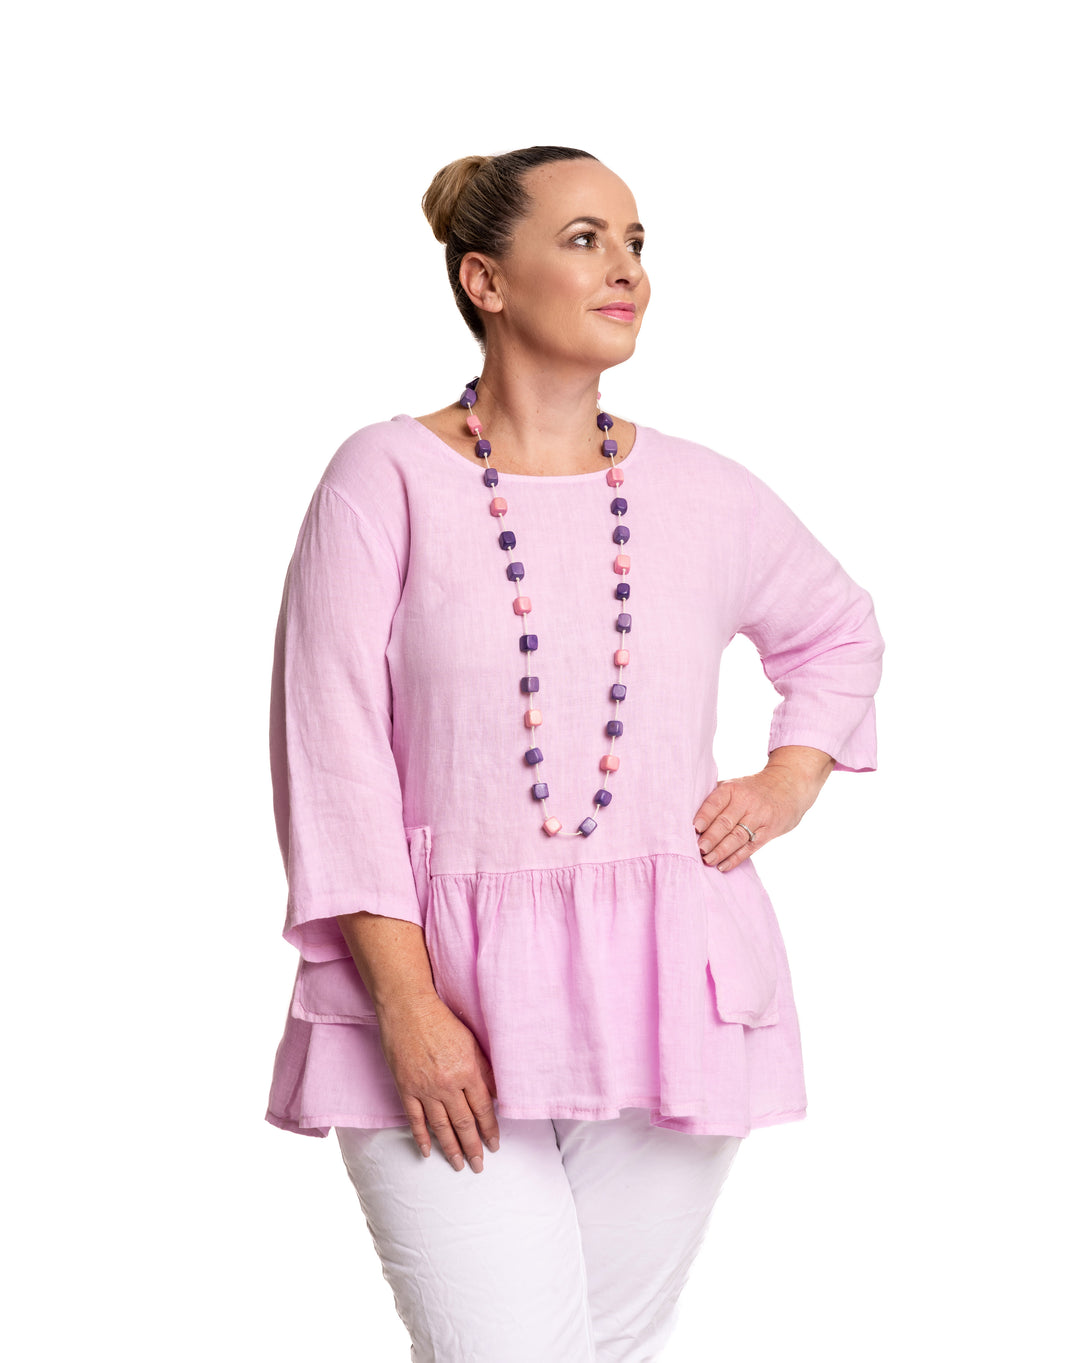 Joanna Linen Top in Petal Pink - Imagine Fashion